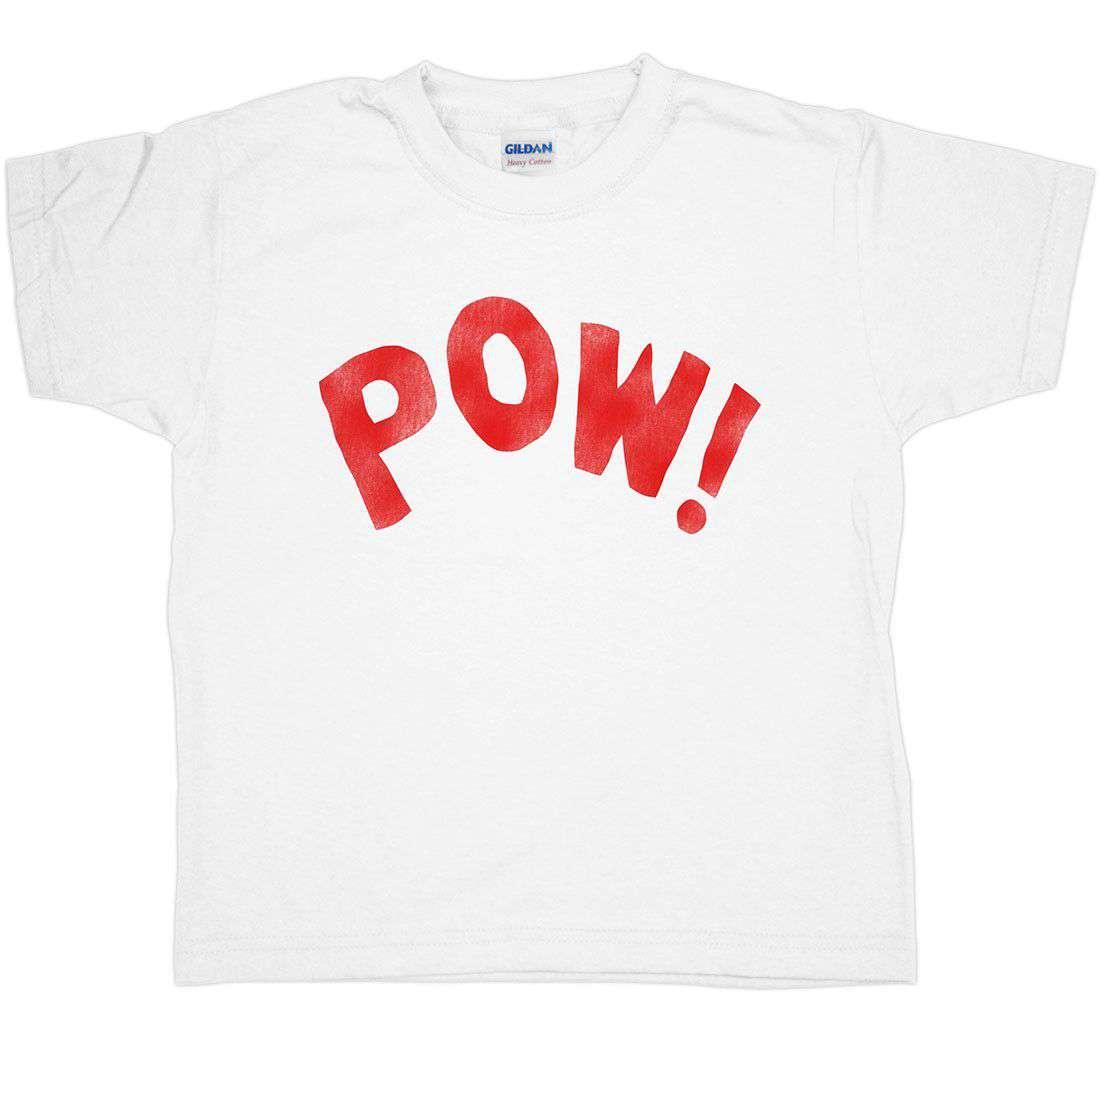 Pow Kids Graphic T-Shirt 8Ball